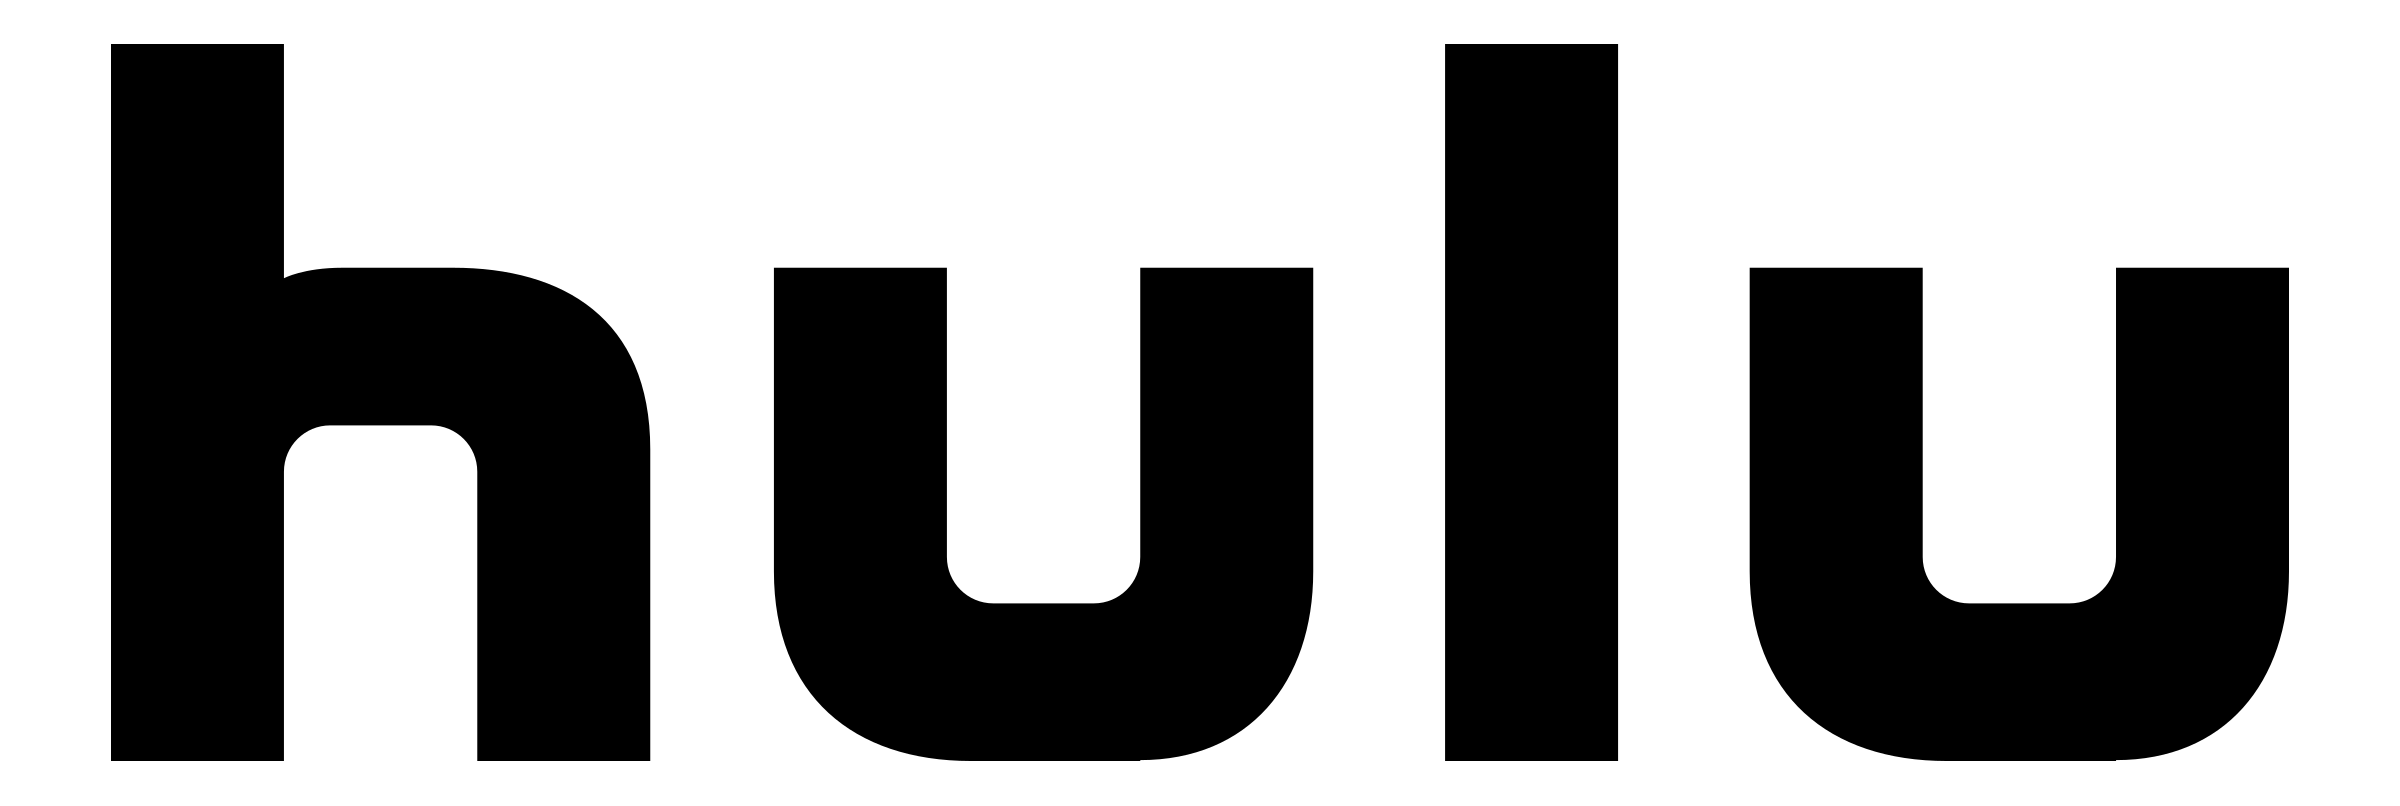 hulu-logo-black-transparent.png